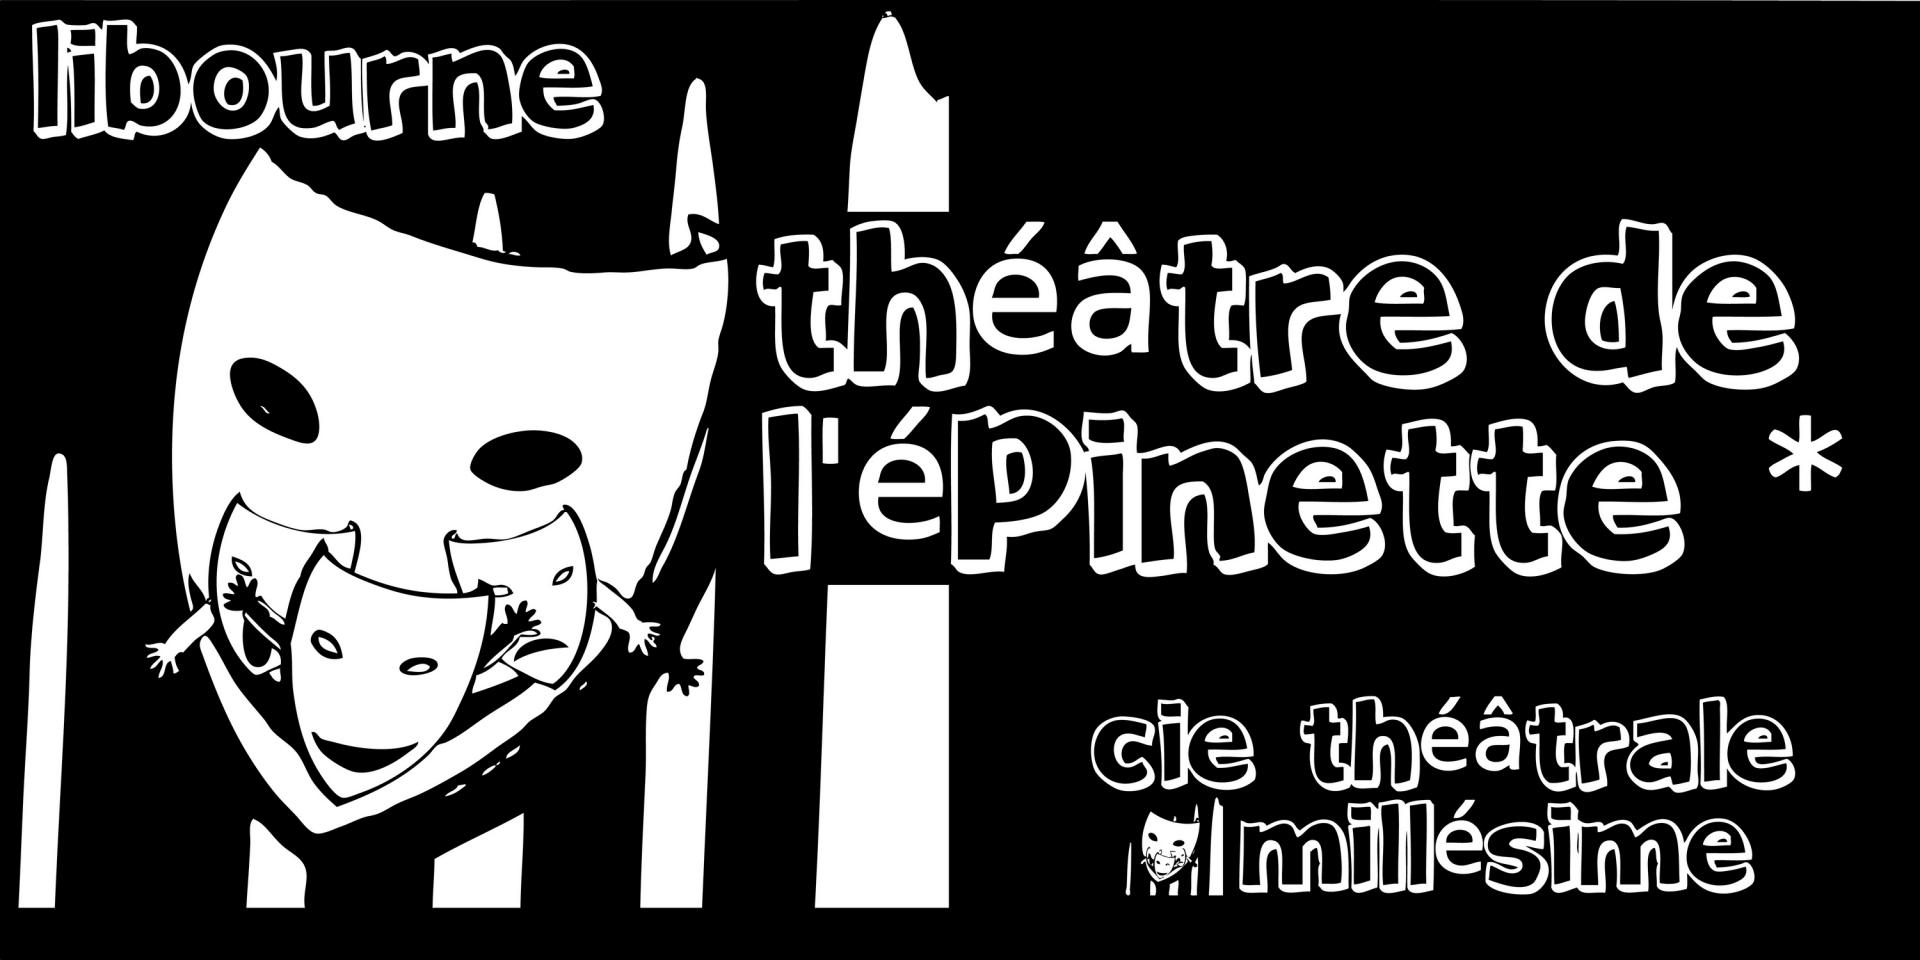 Logo sweat theatre epinette